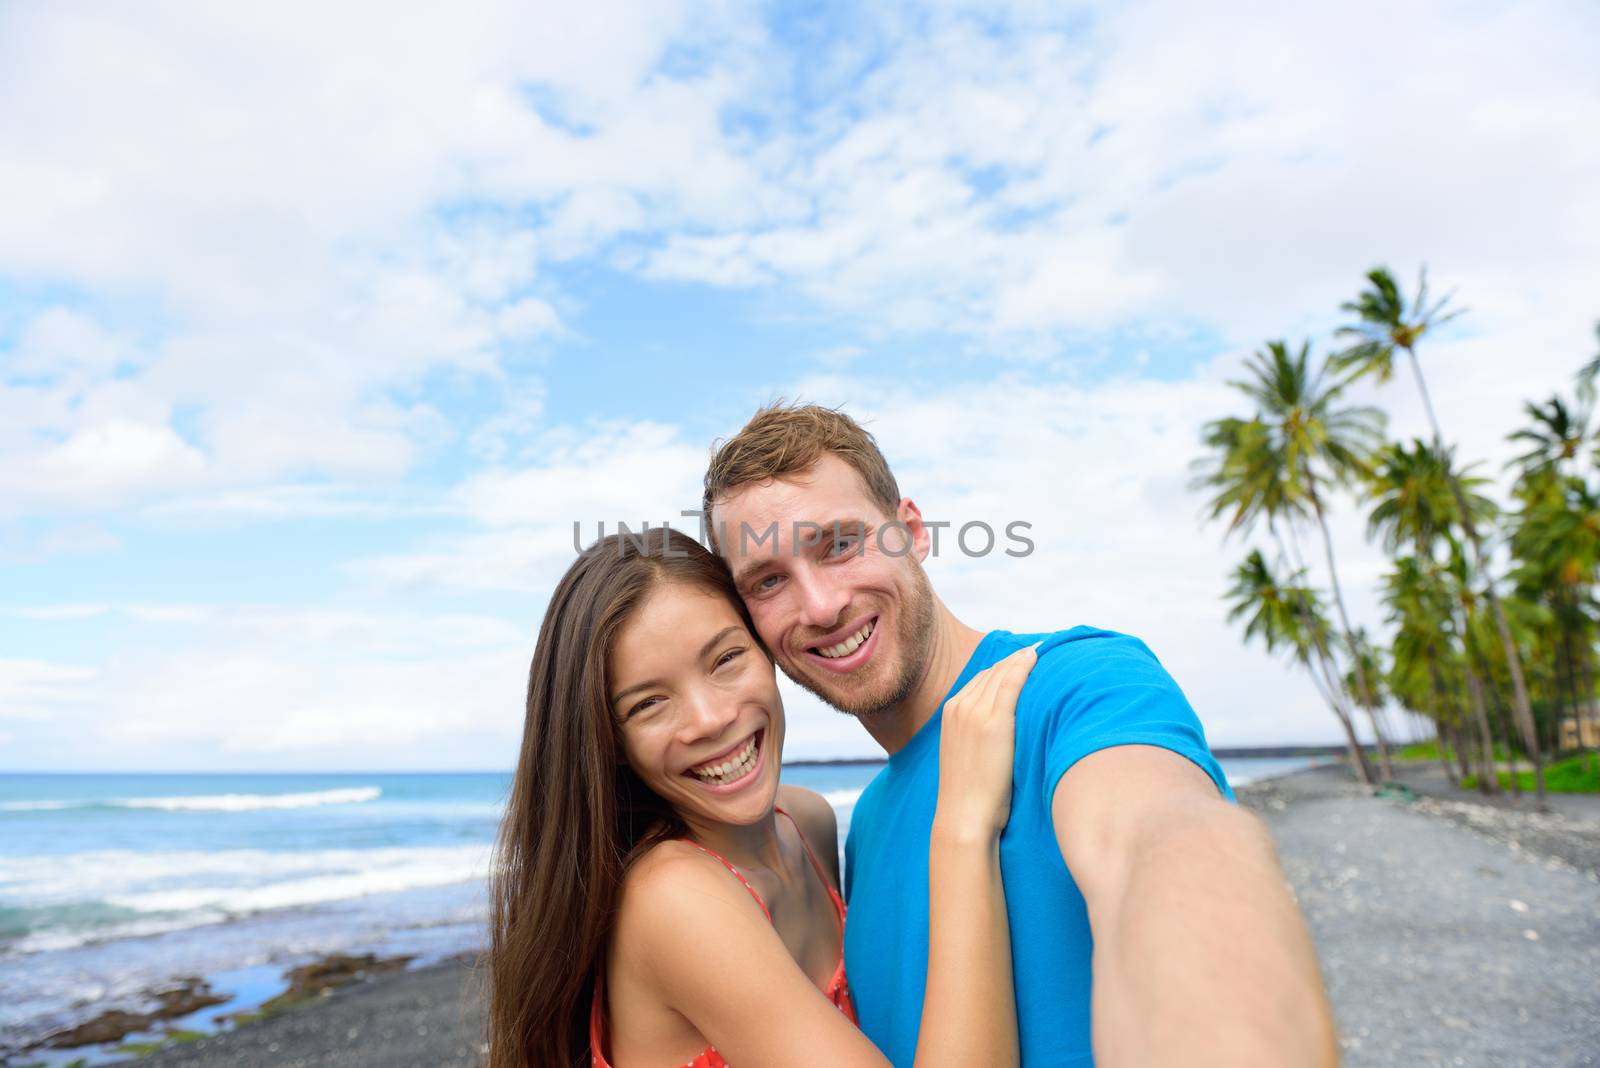 Selfie couple on Hawaii beach holiday taking pictures with smartphone on summer vacations in Big island, Hawaii. Travel destination. People having fun vlogging on social media on hawaiian holidays.